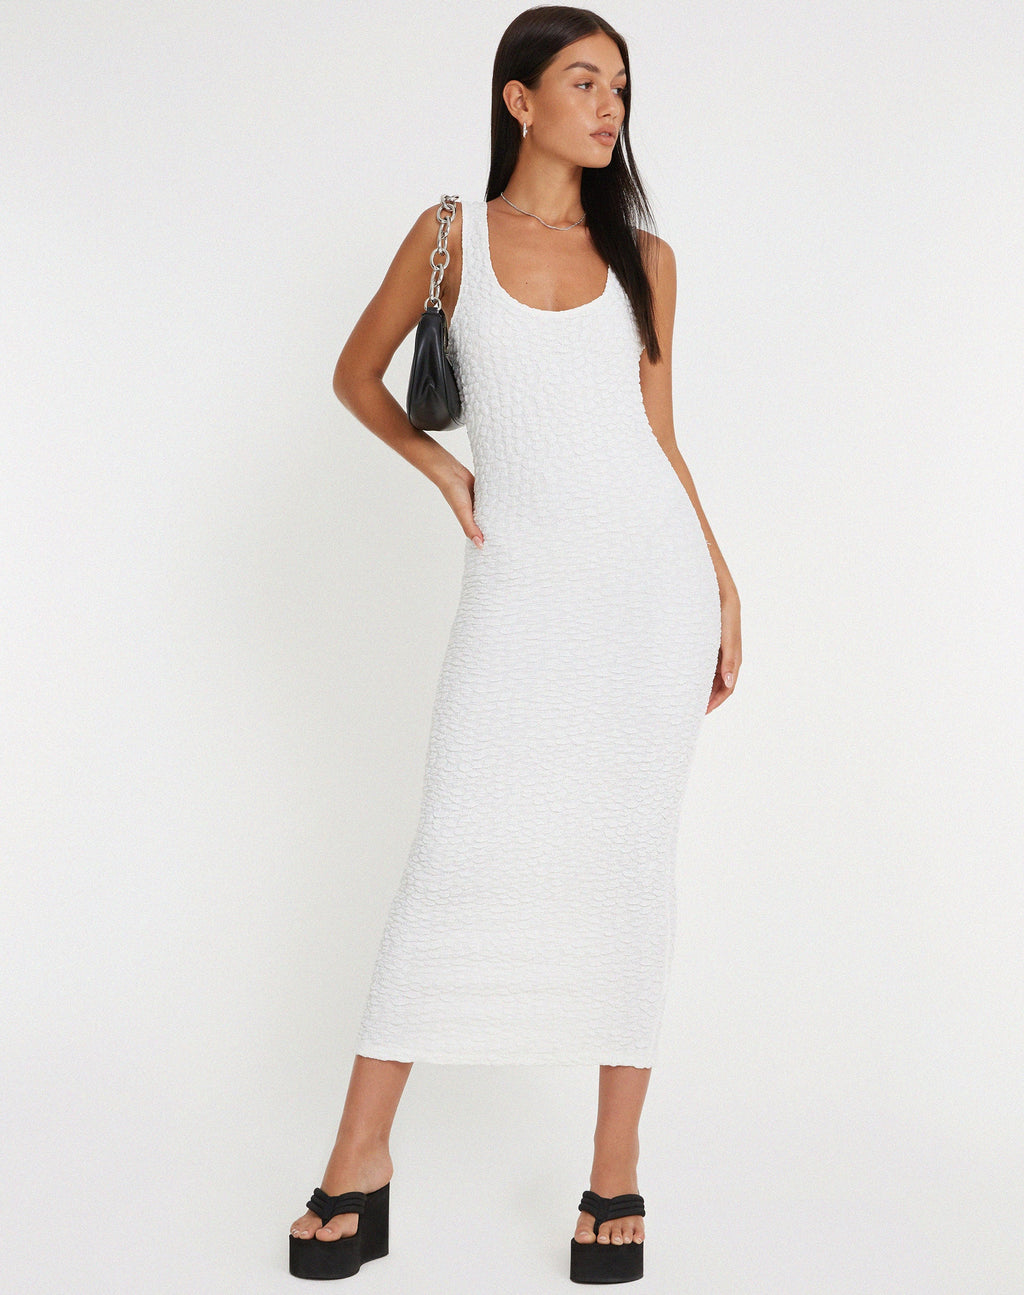 Roski Textured Midi Dress in White